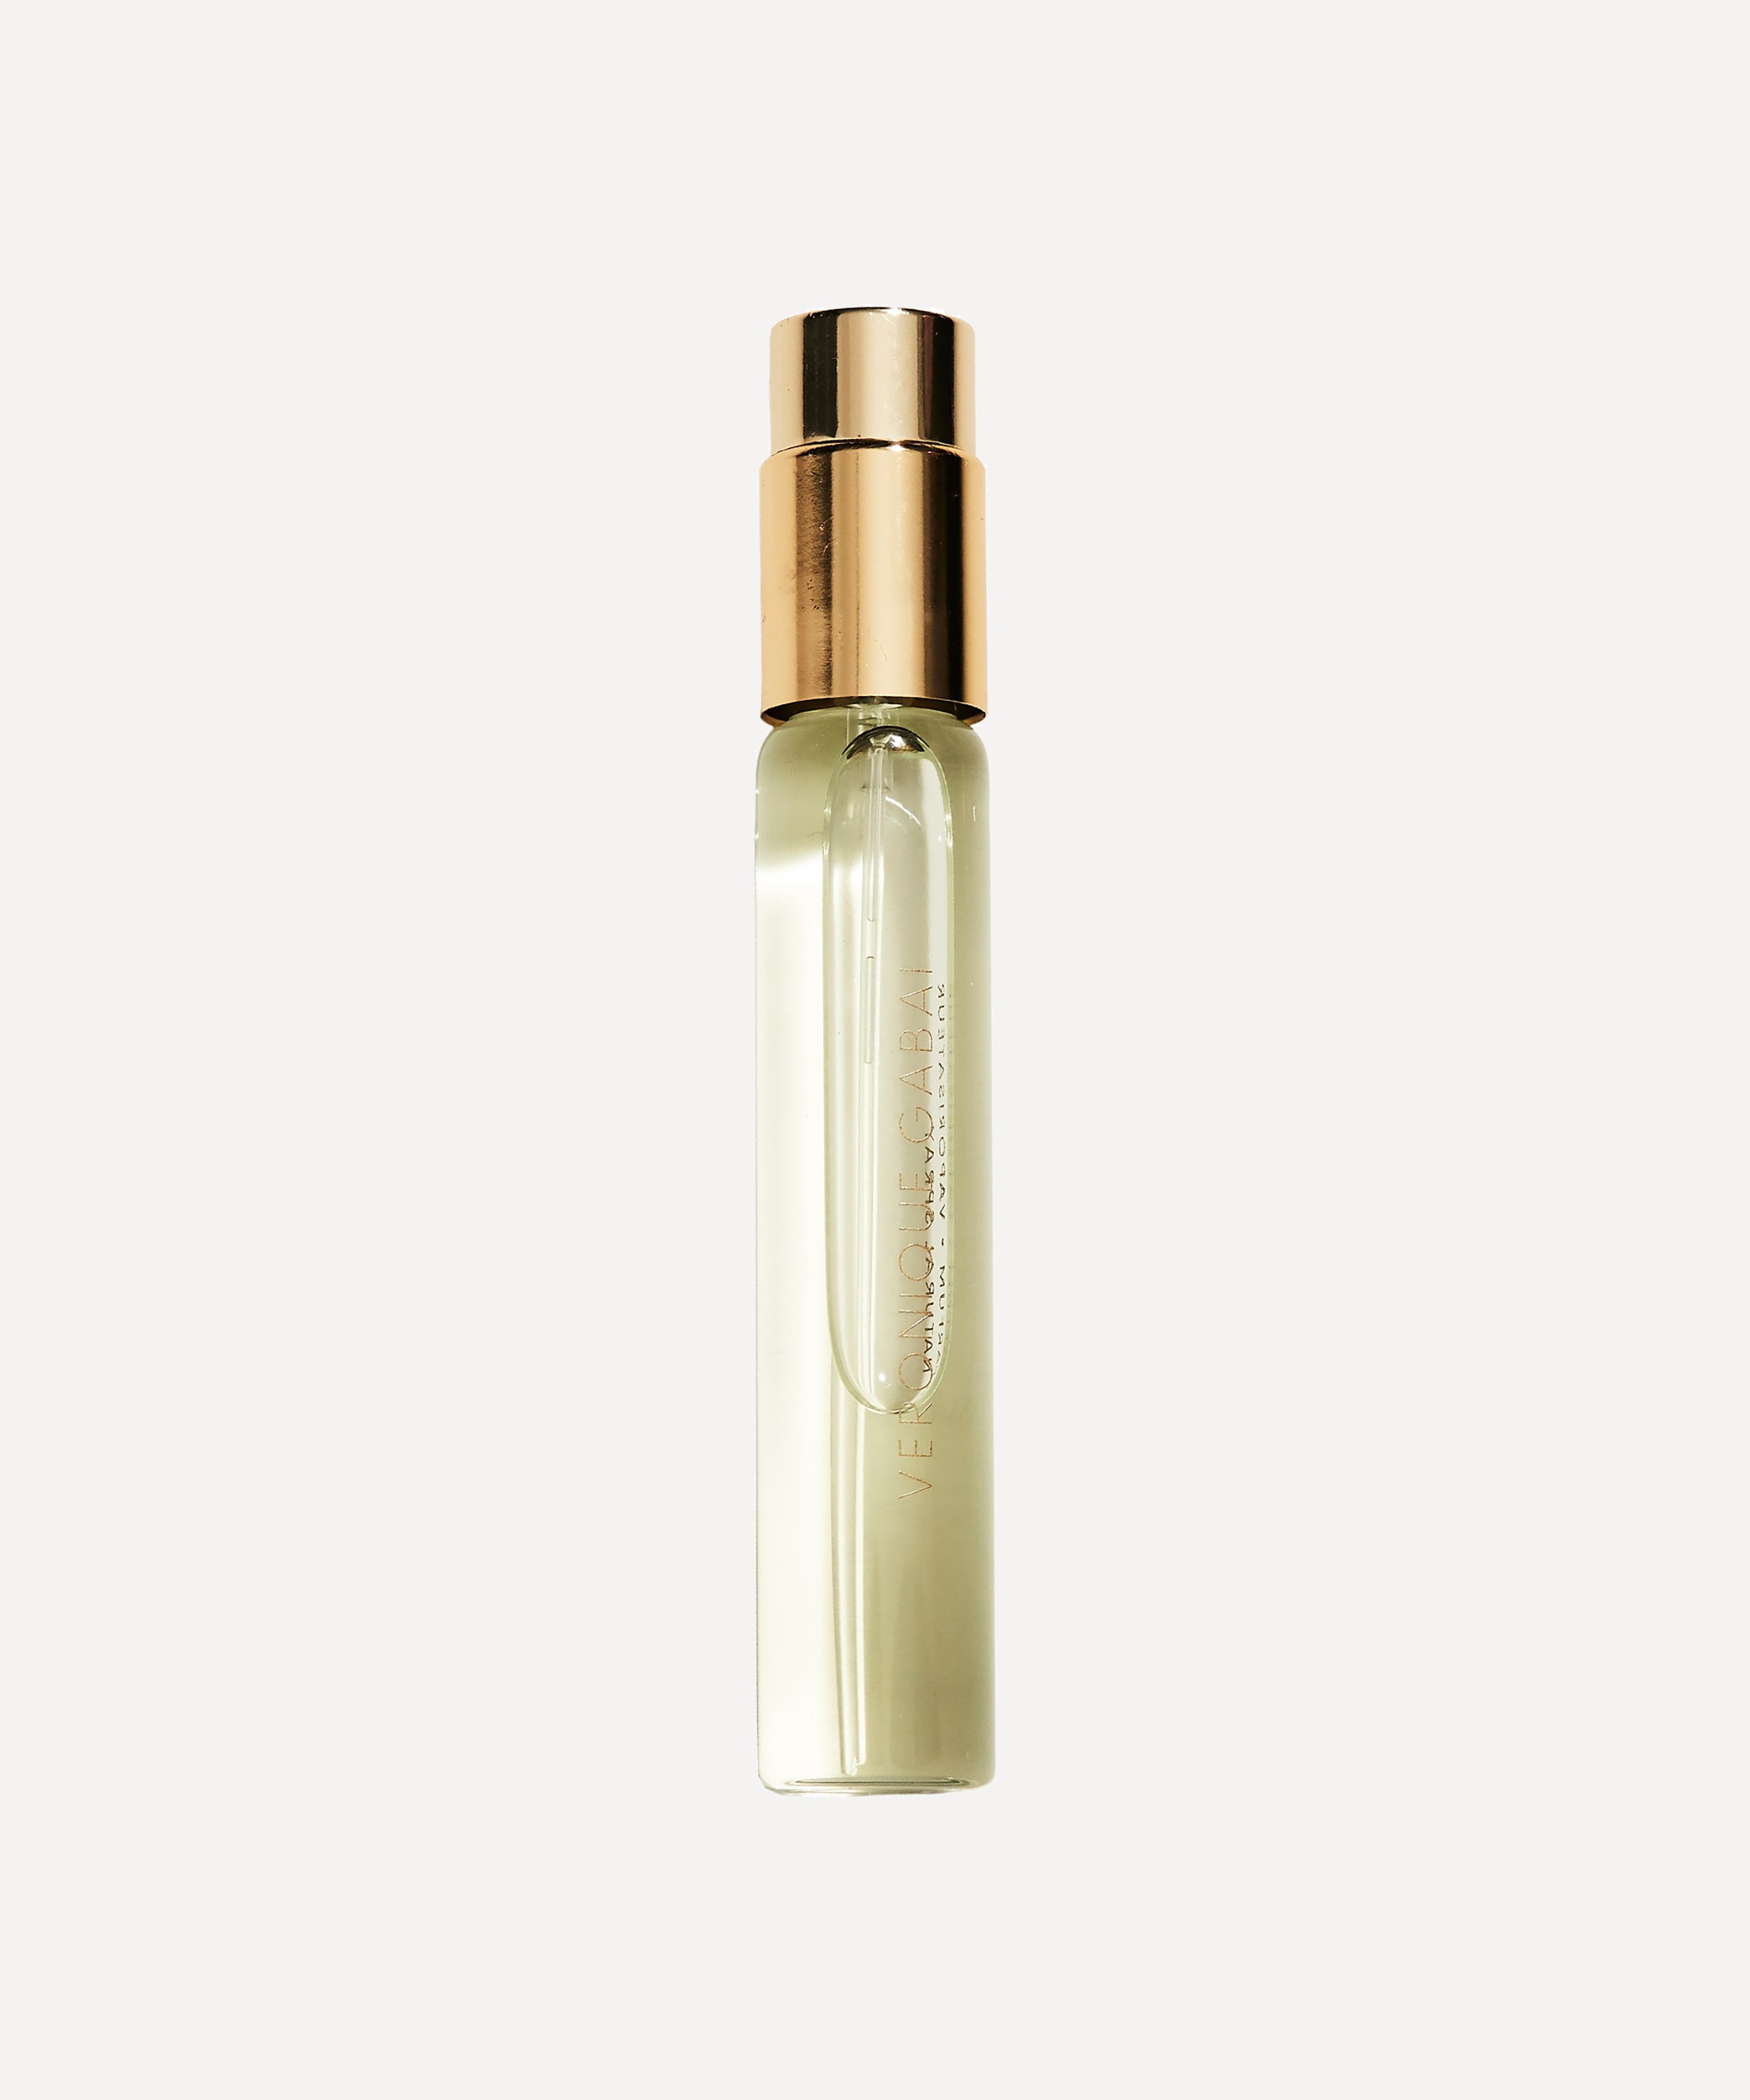 Veronique Gabai - Sexy Garrigue Eau de Parfum Travel Spray 10ml